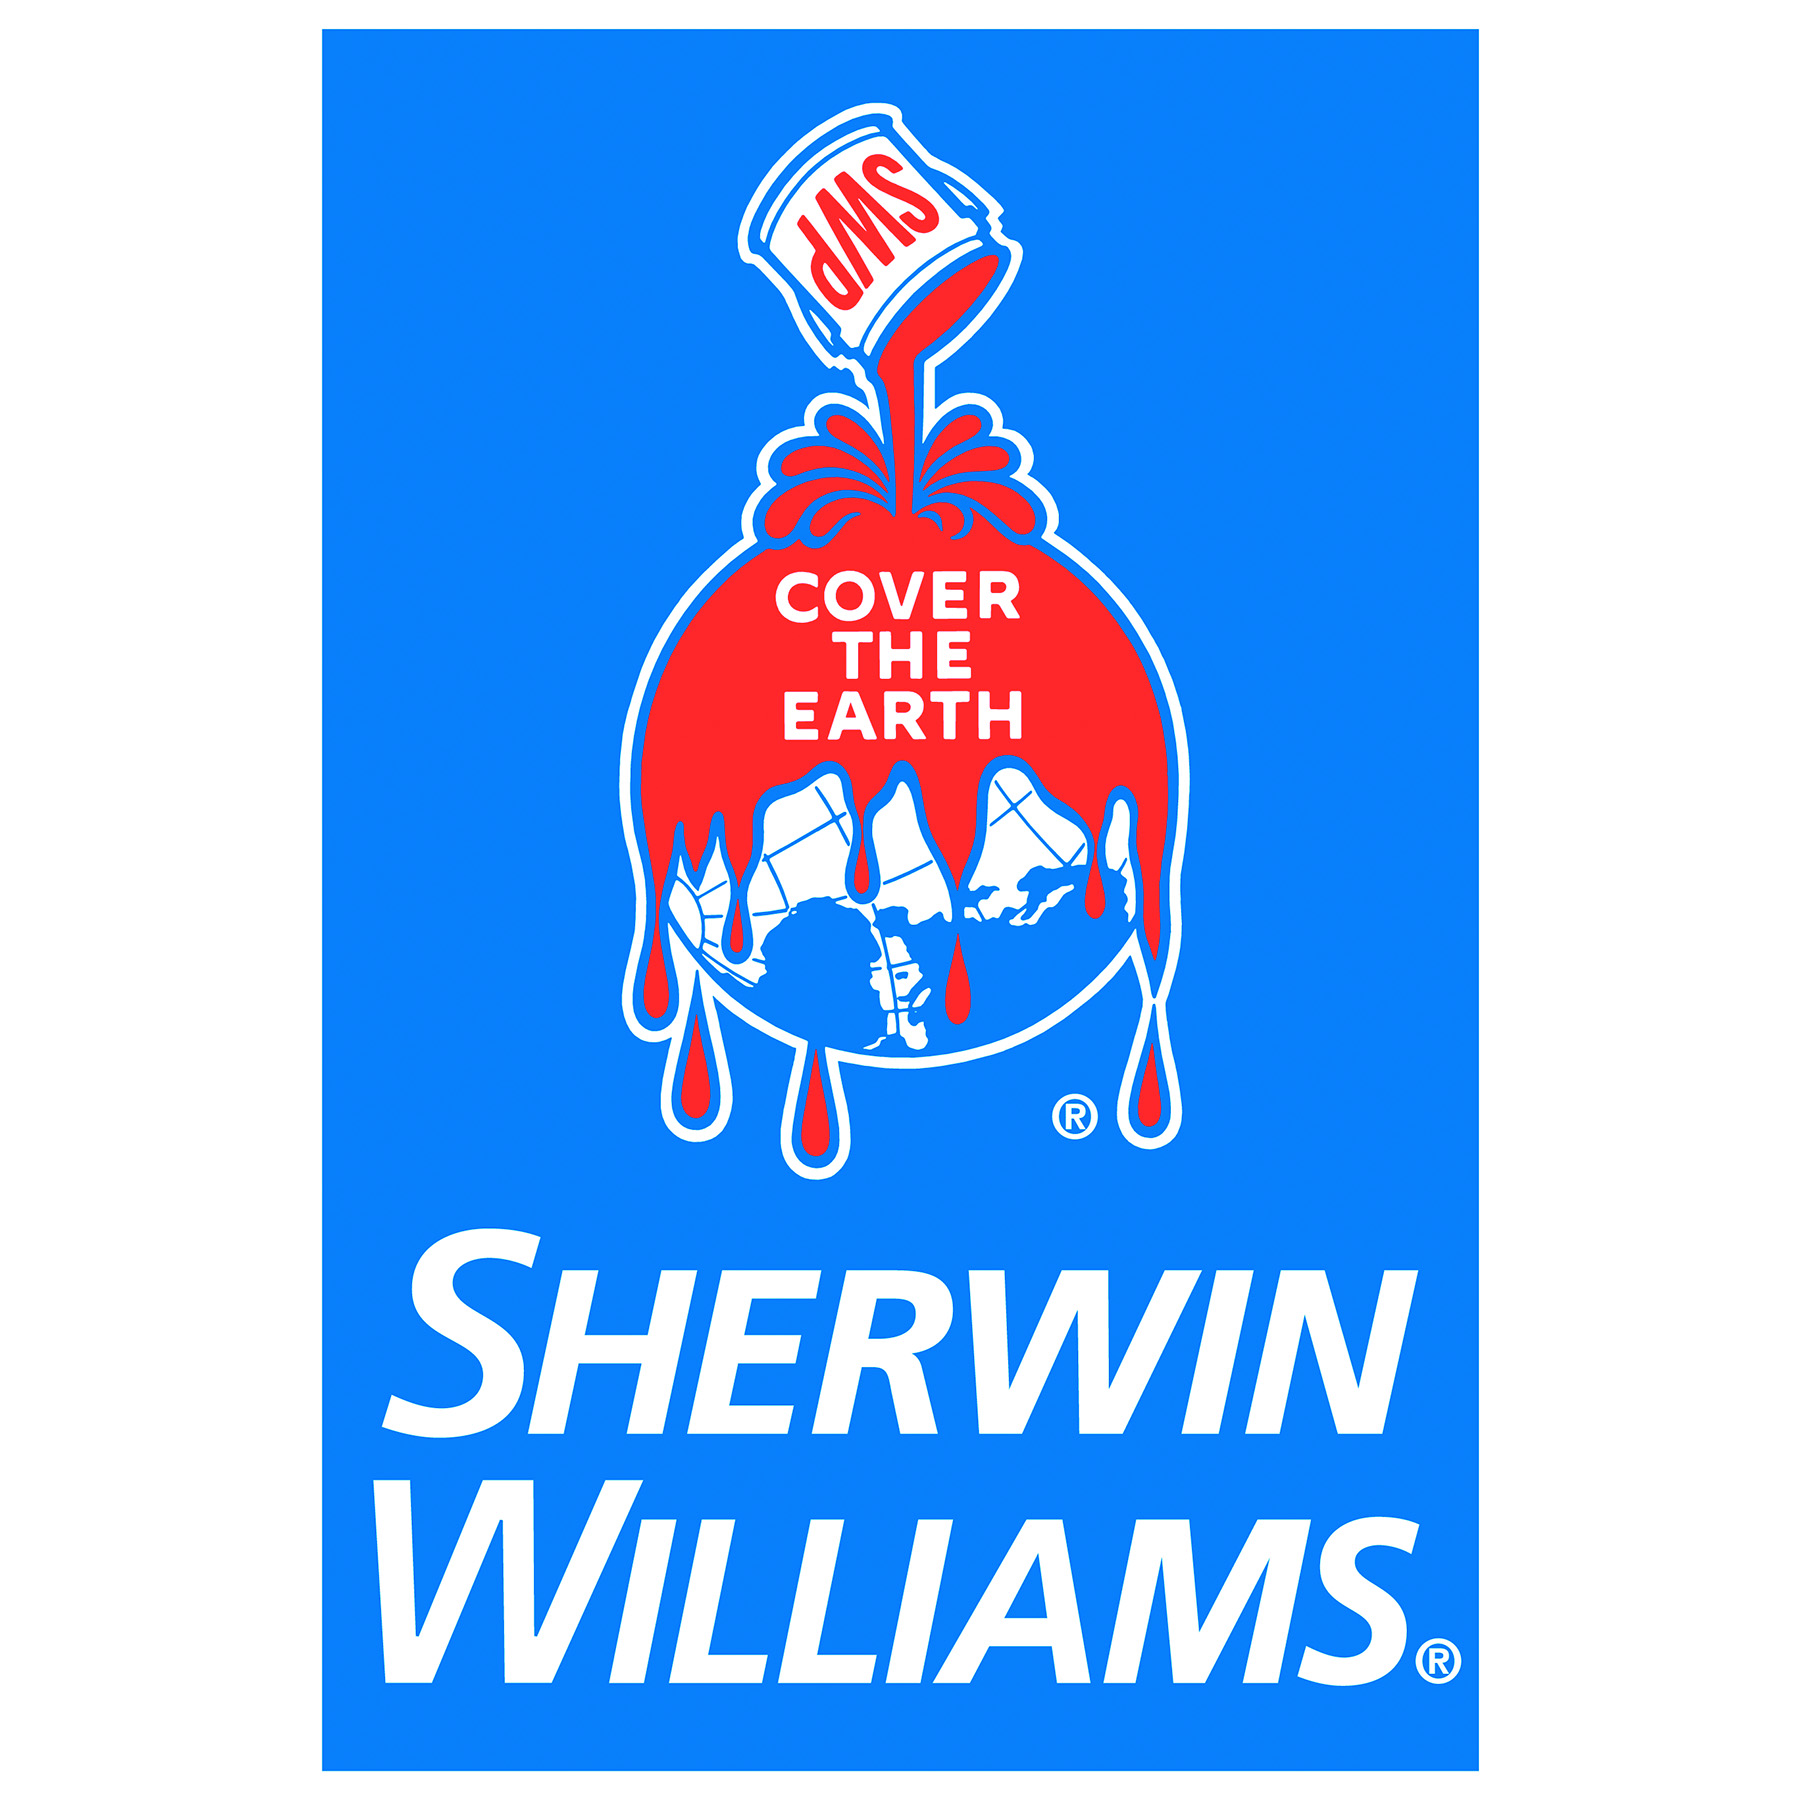 Sherwin Williams vendor logo